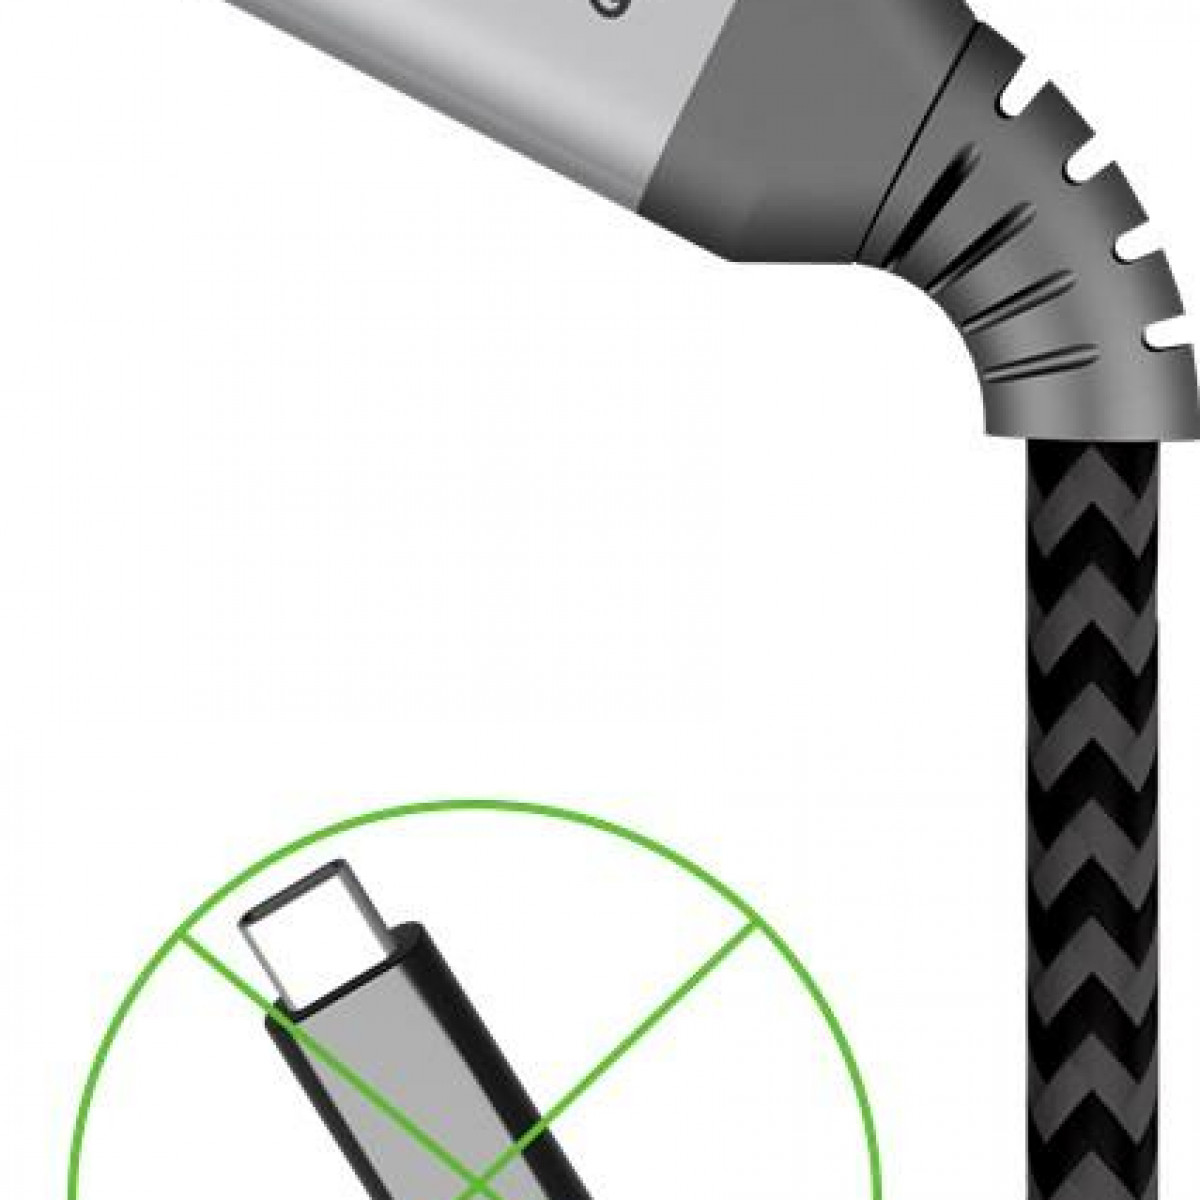 Metallsteckern (spacegrau/silber), auf Lightning 0,5 Textilkabel kabel, USB-A mit GOOBAY m Lightning